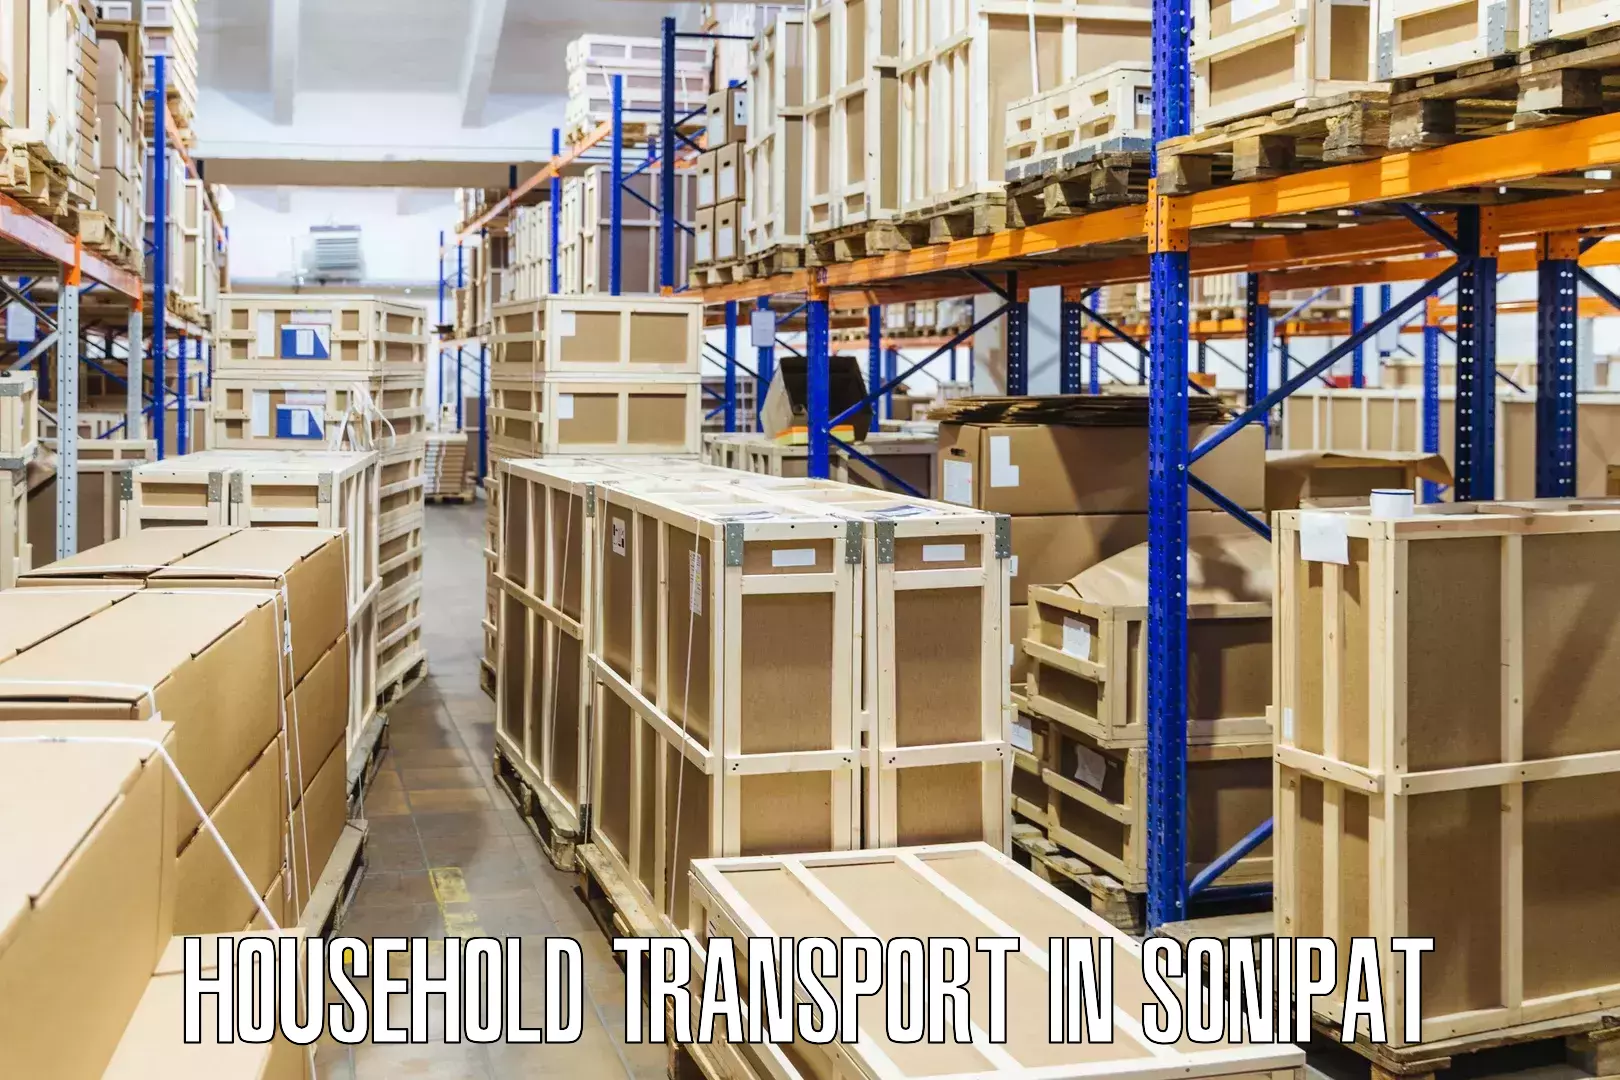 Trusted furniture transport in Sonipat